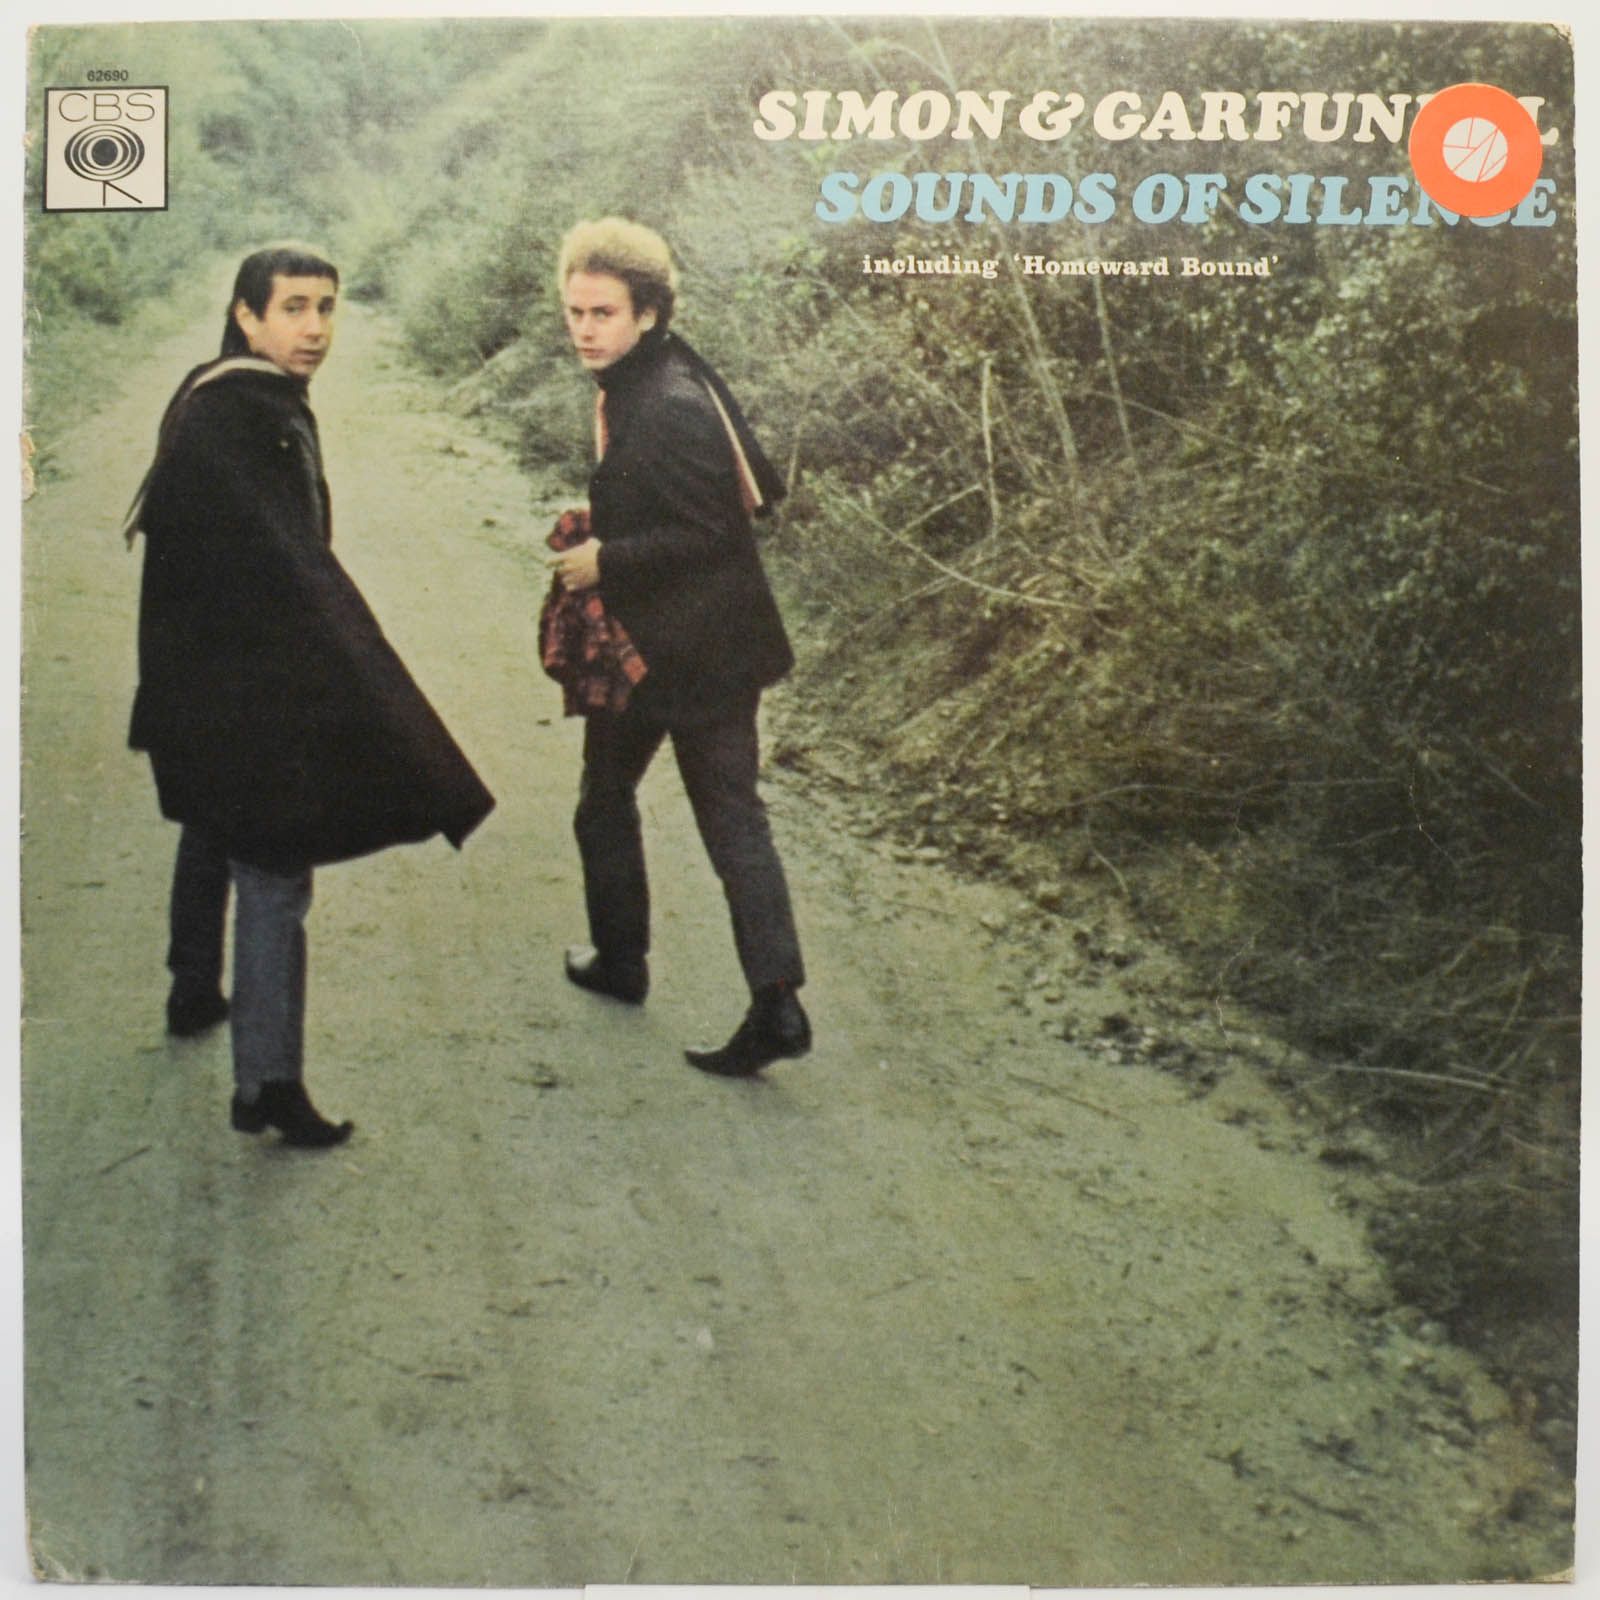 Simon & Garfunkel — Sounds Of Silence (UK), 1966